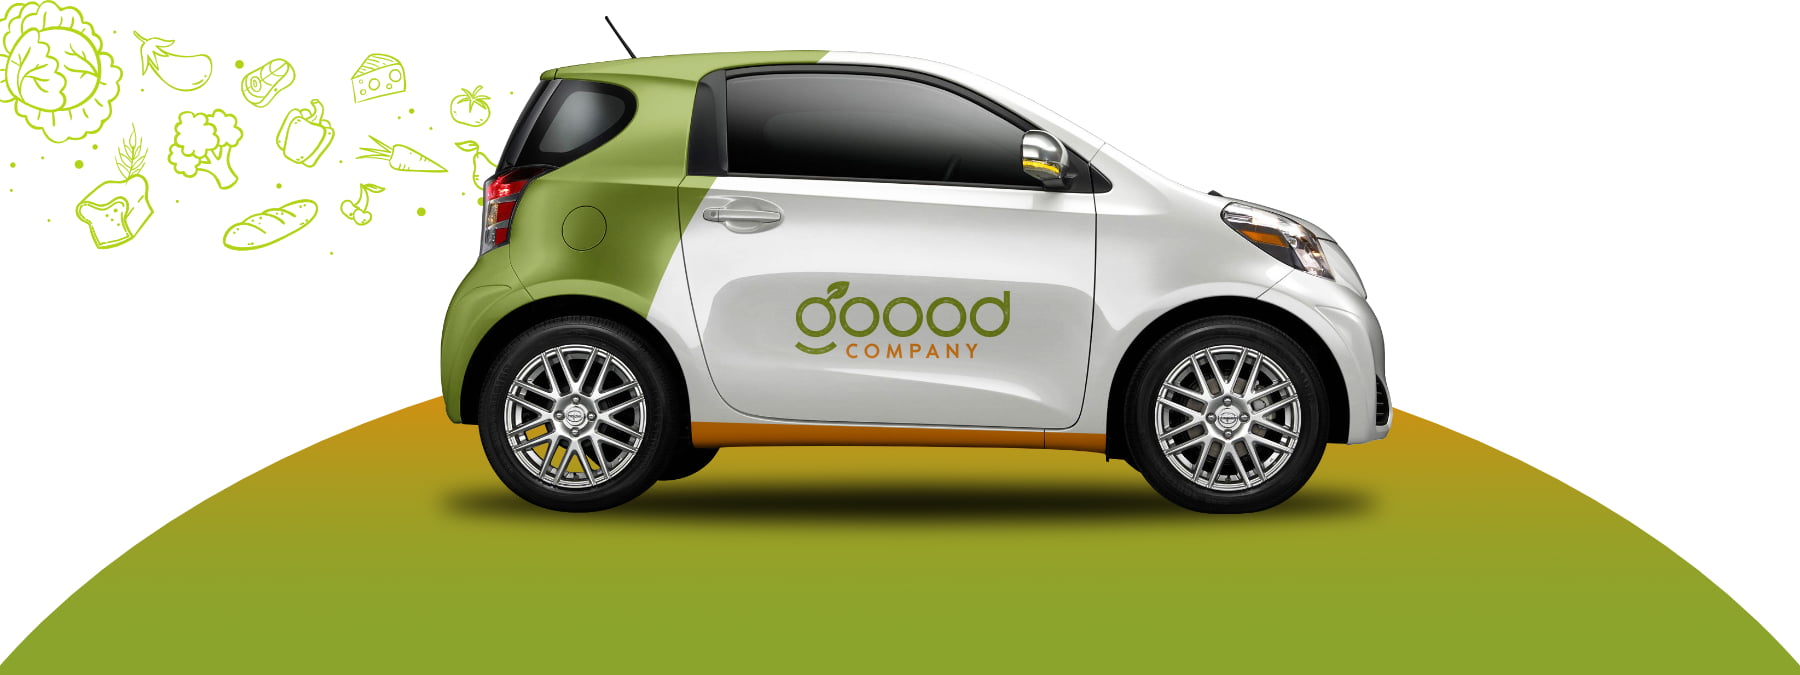 Goood electric car - Rene Verkaart)